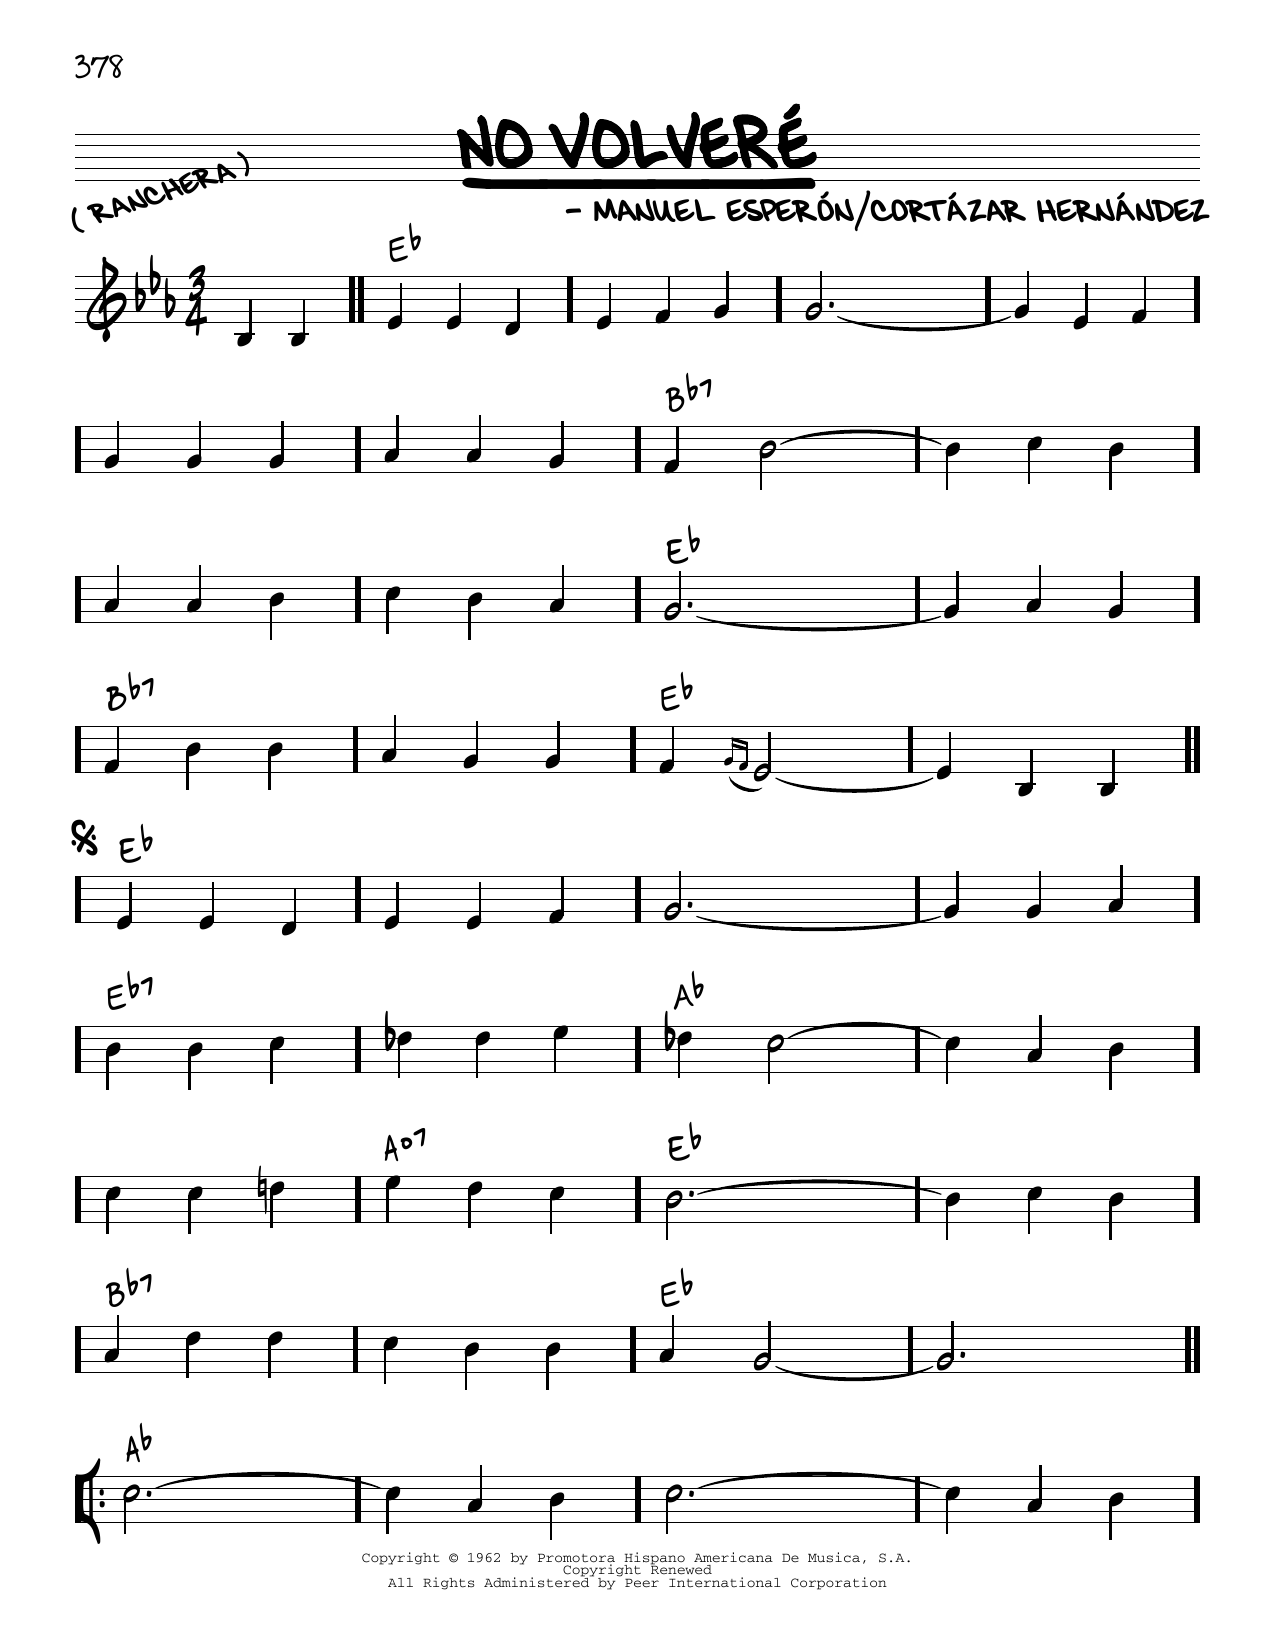 Ernesto M. Cortazar Hernandez No Volvere Sheet Music Notes & Chords for Real Book – Melody & Chords - Download or Print PDF